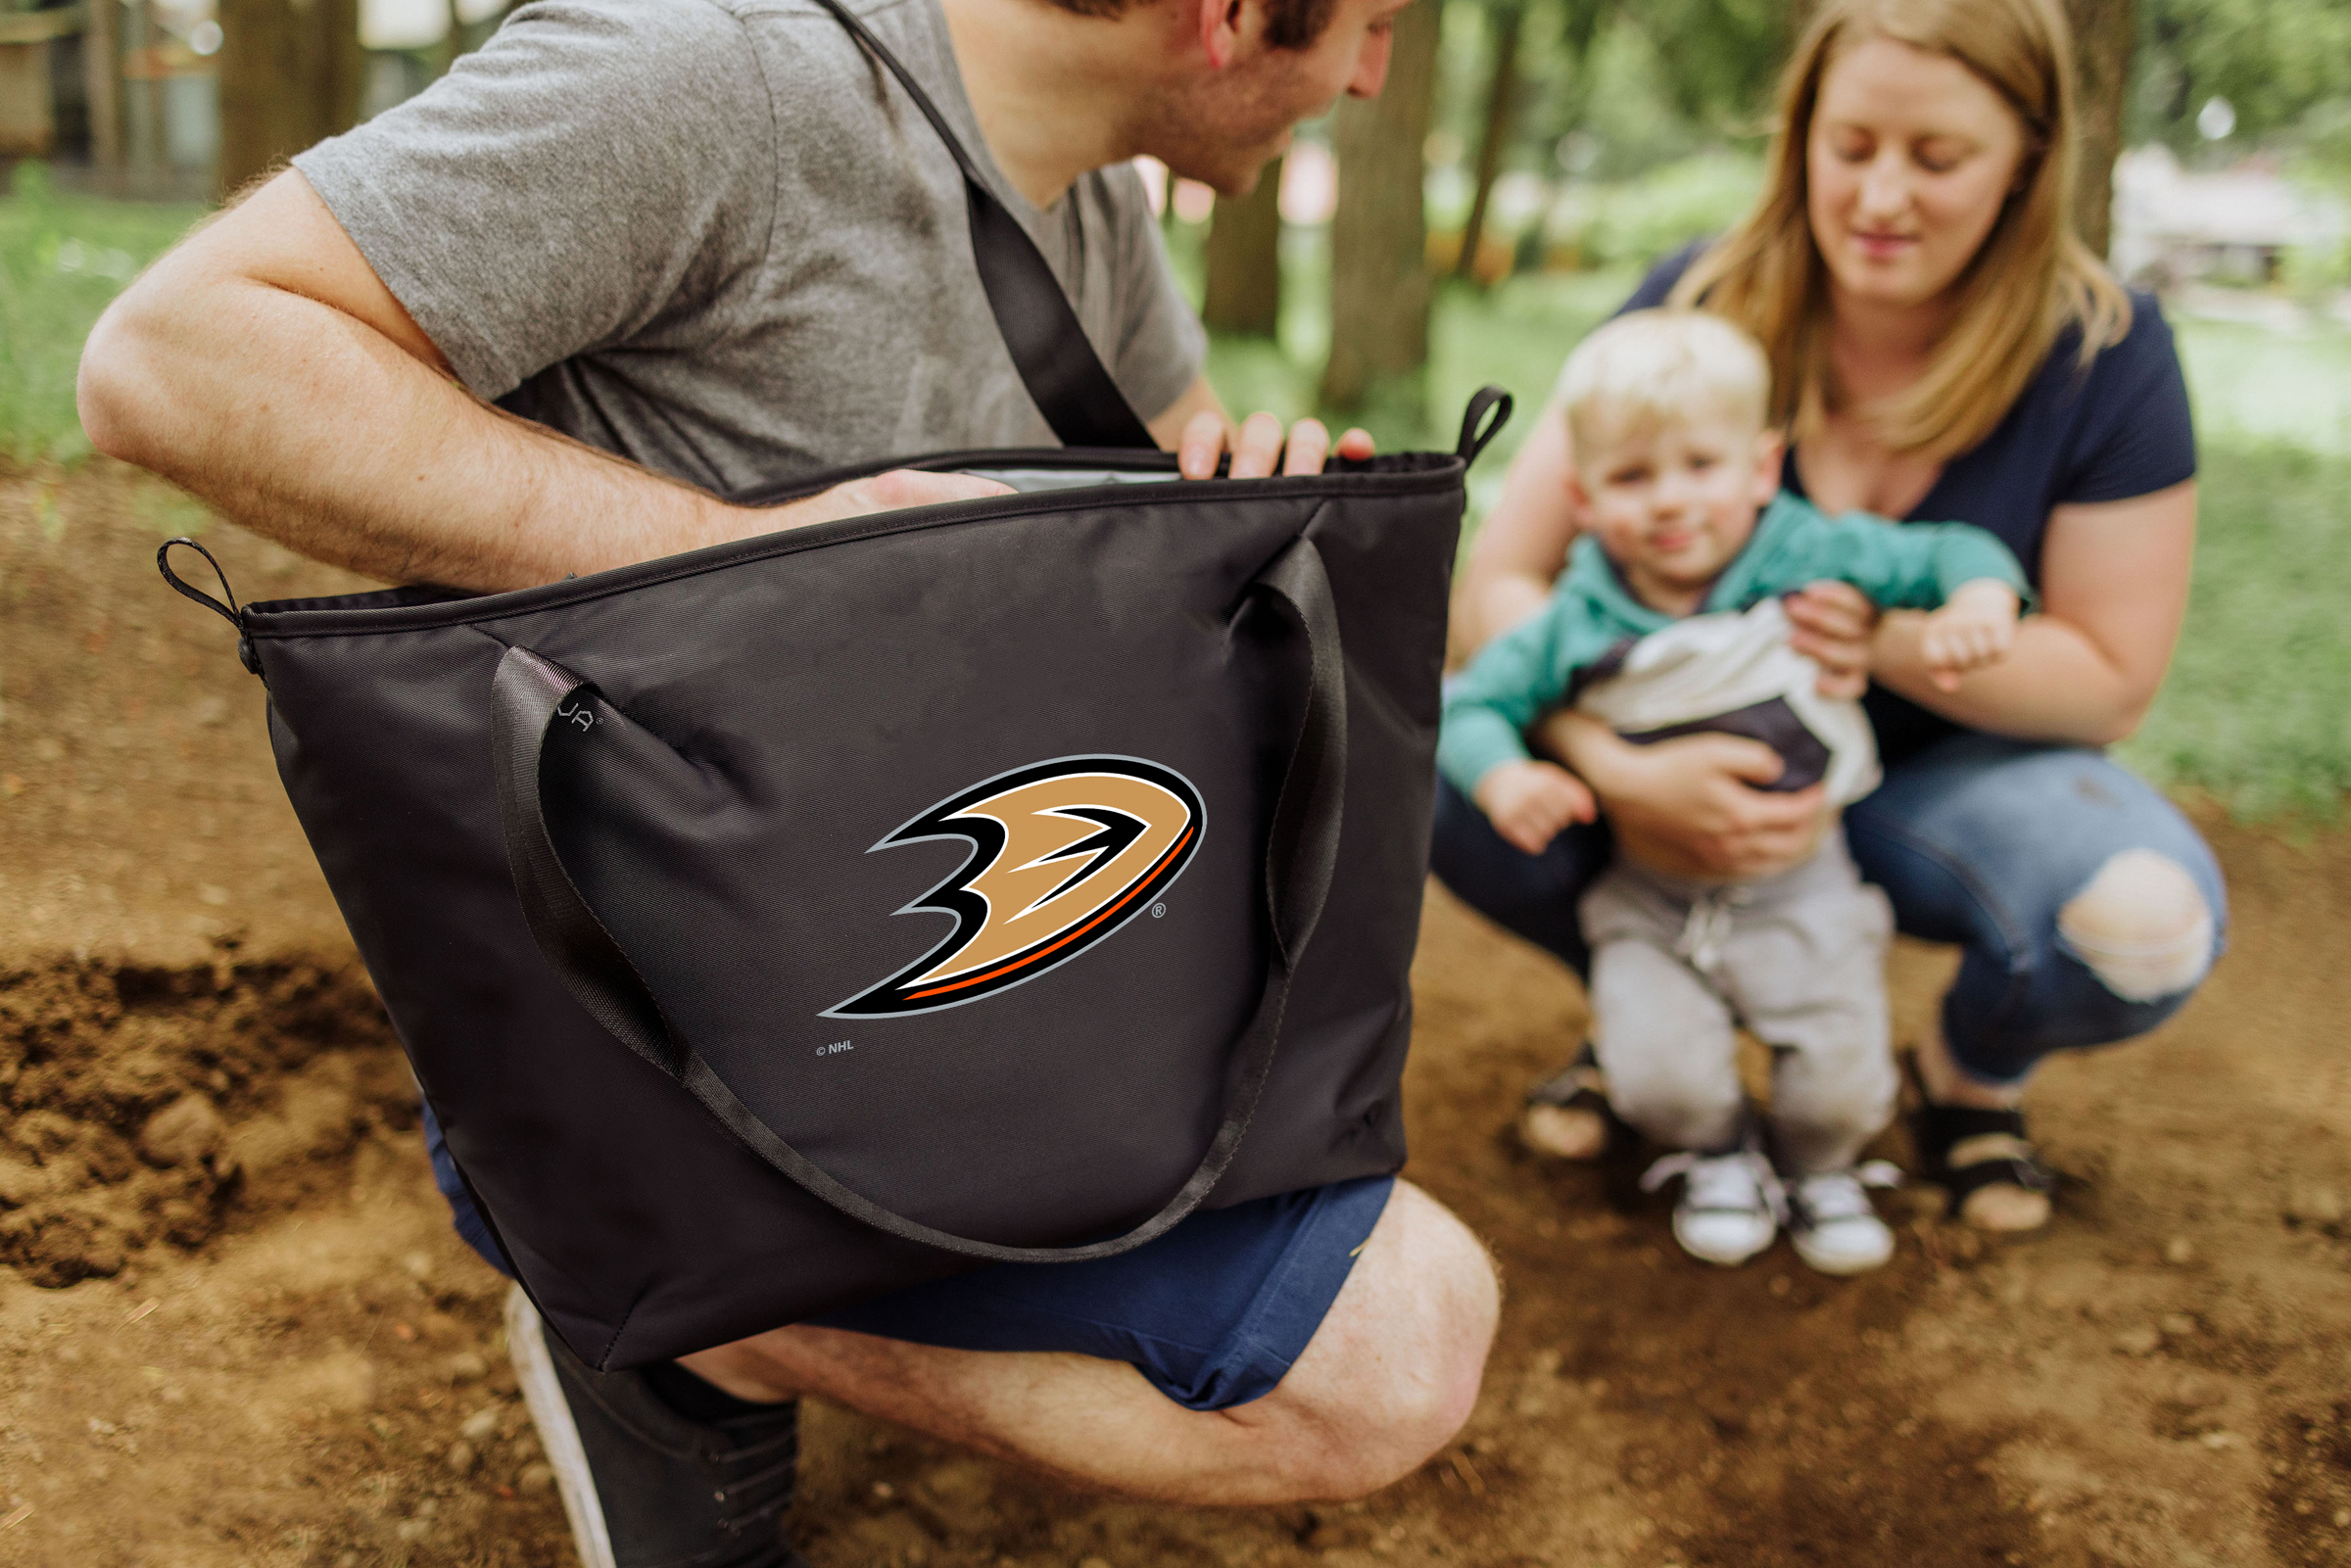 Anaheim Ducks - Tarana Cooler Tote Bag